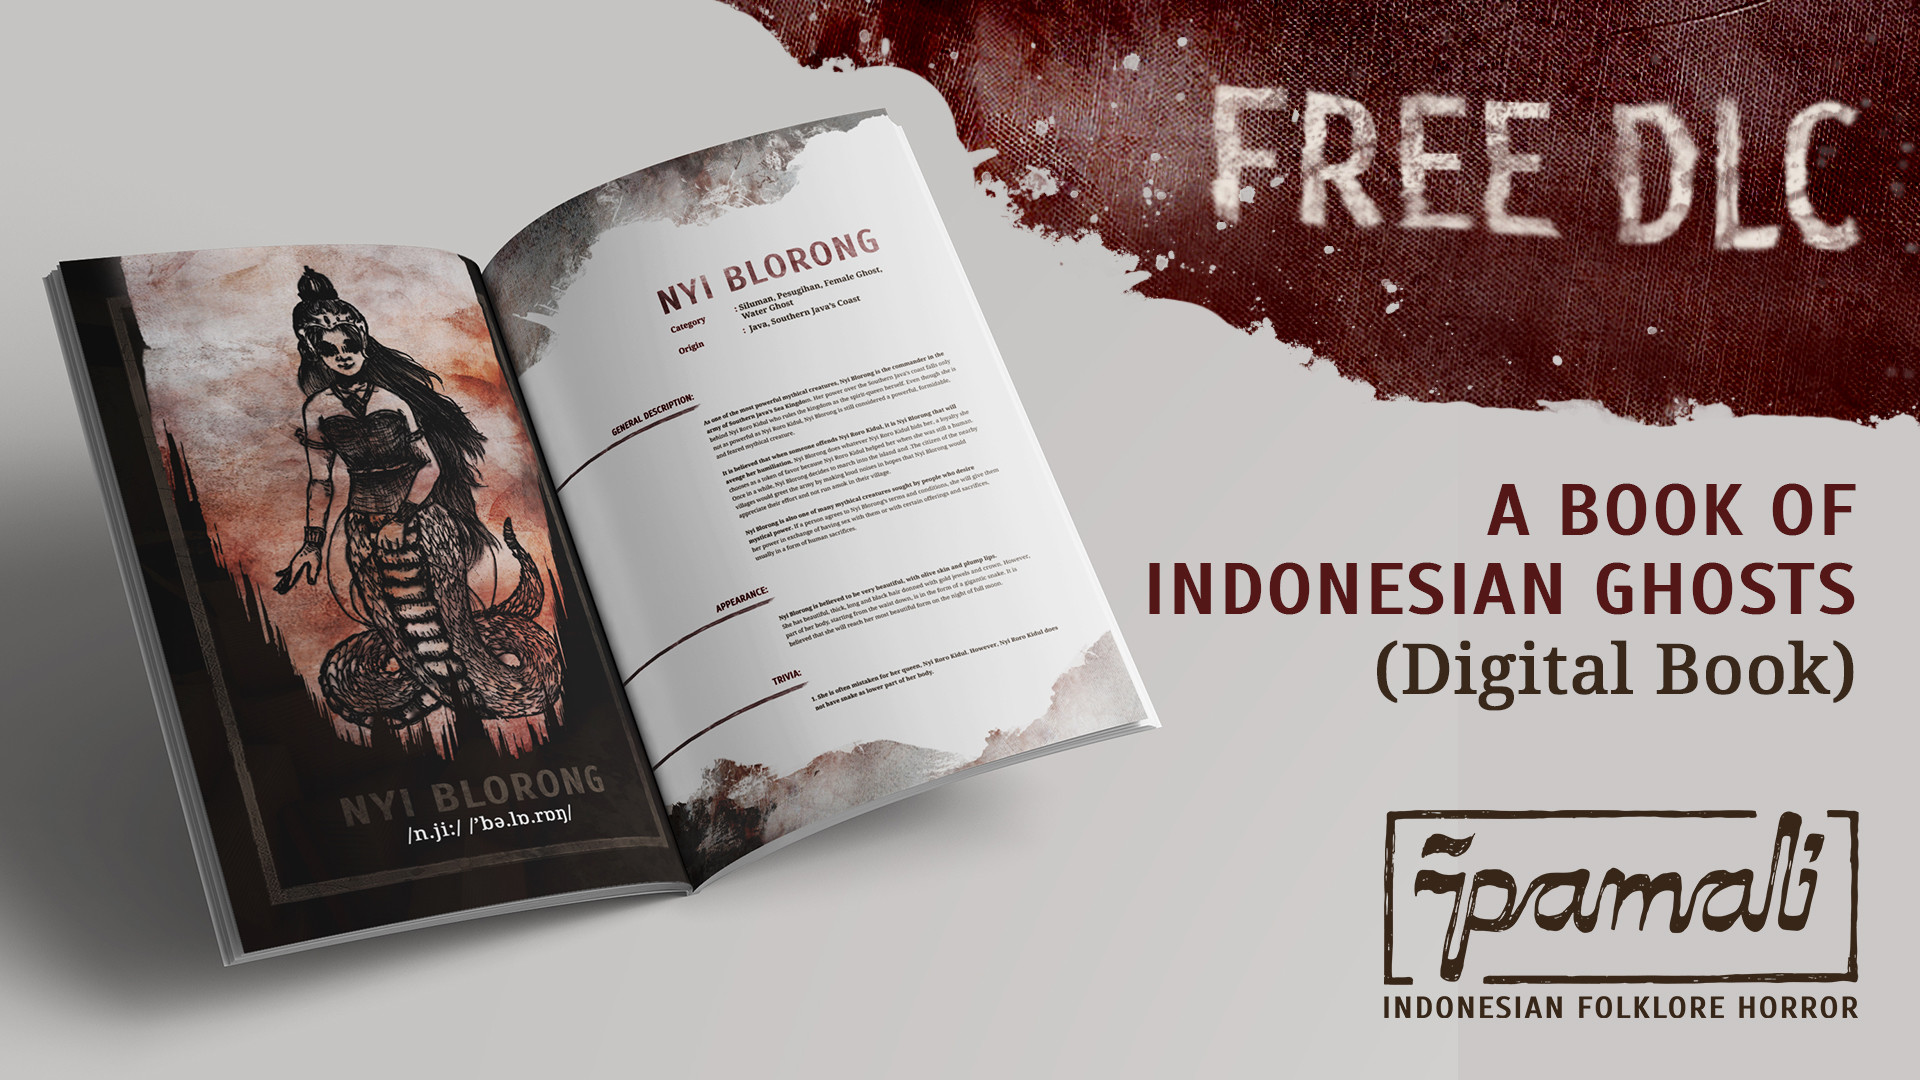 Pamali Indonesian Folklore Horror Free Download